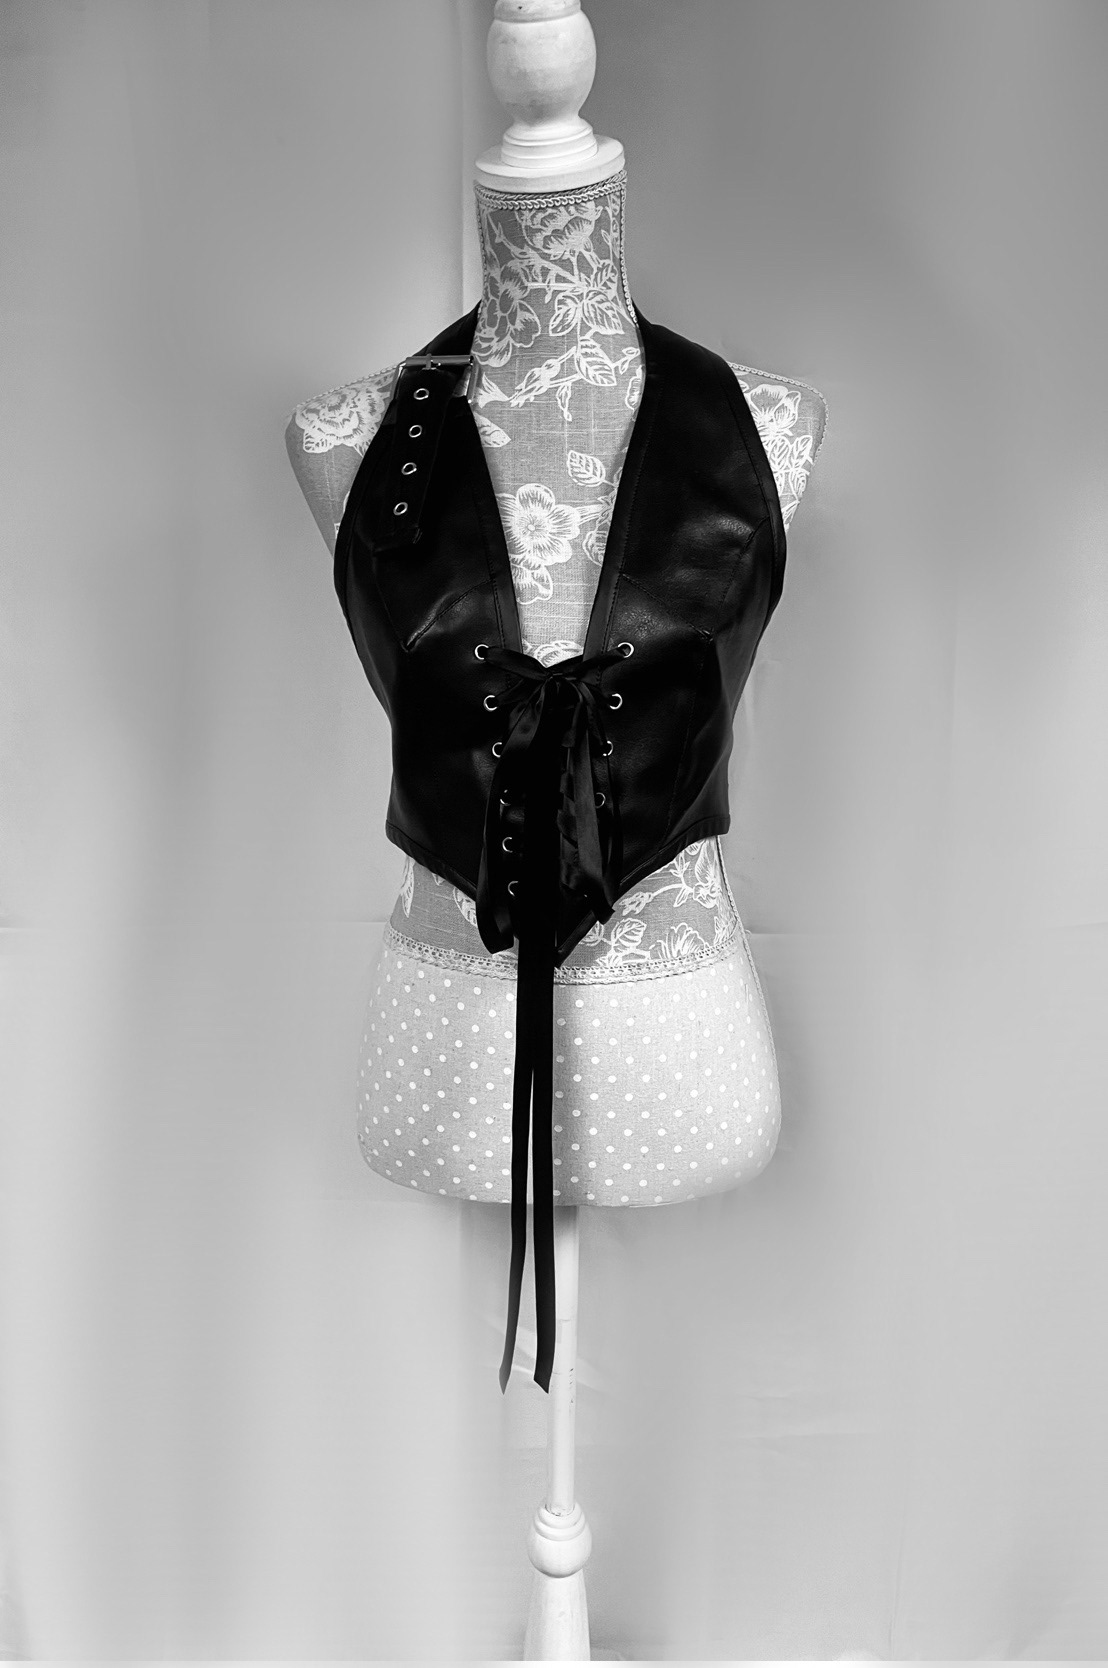 Fashion  fashion design leather laceup corset black Pattern cutting handmade Startup bespoke design belt sewing eyelets